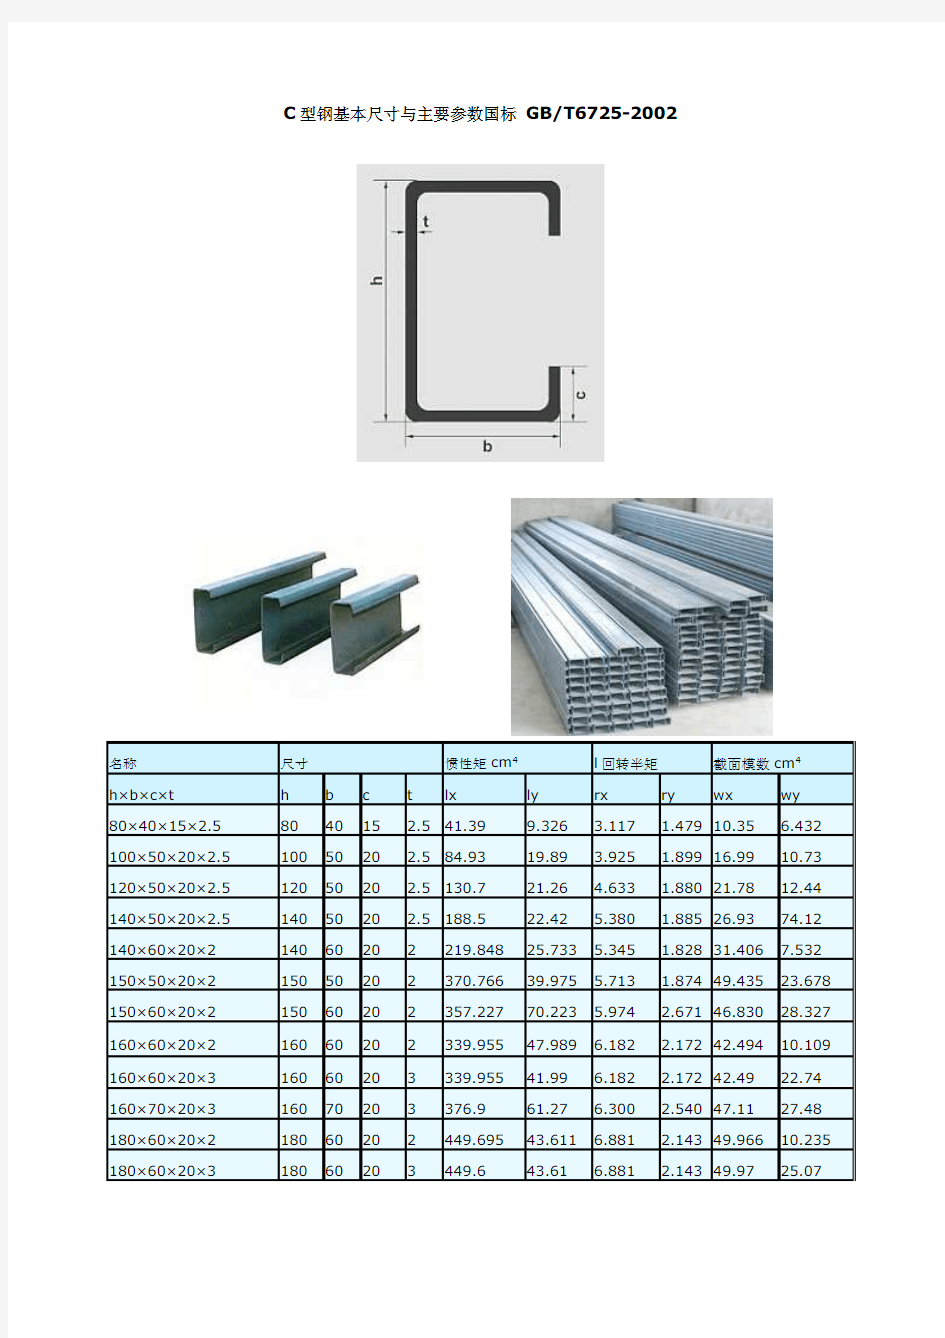 C型钢、Z型钢、方矩形管基本尺寸与主要参数国标,另附彩钢压型复合板